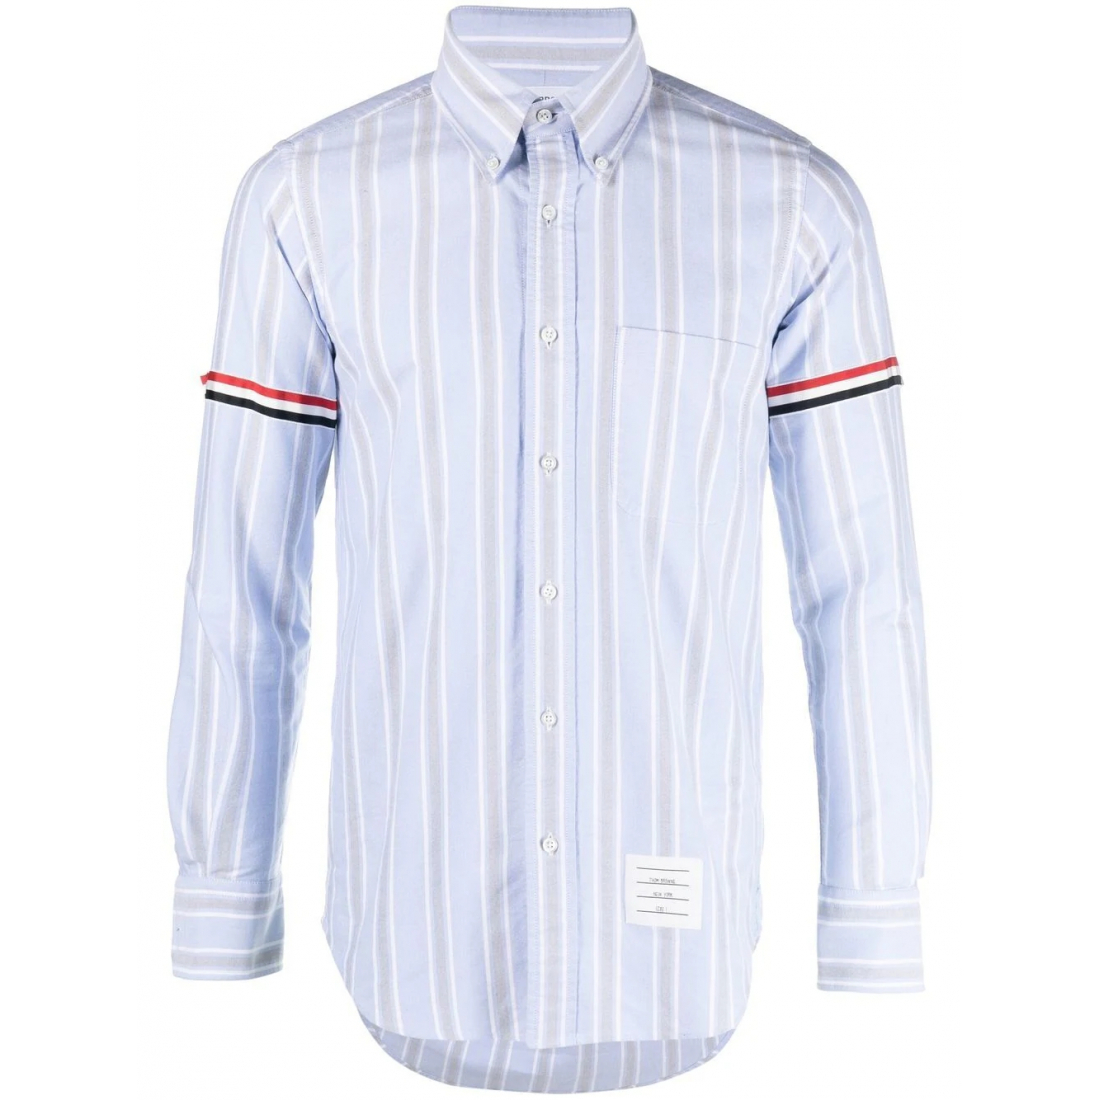 Men's 'Stripe' Shirt